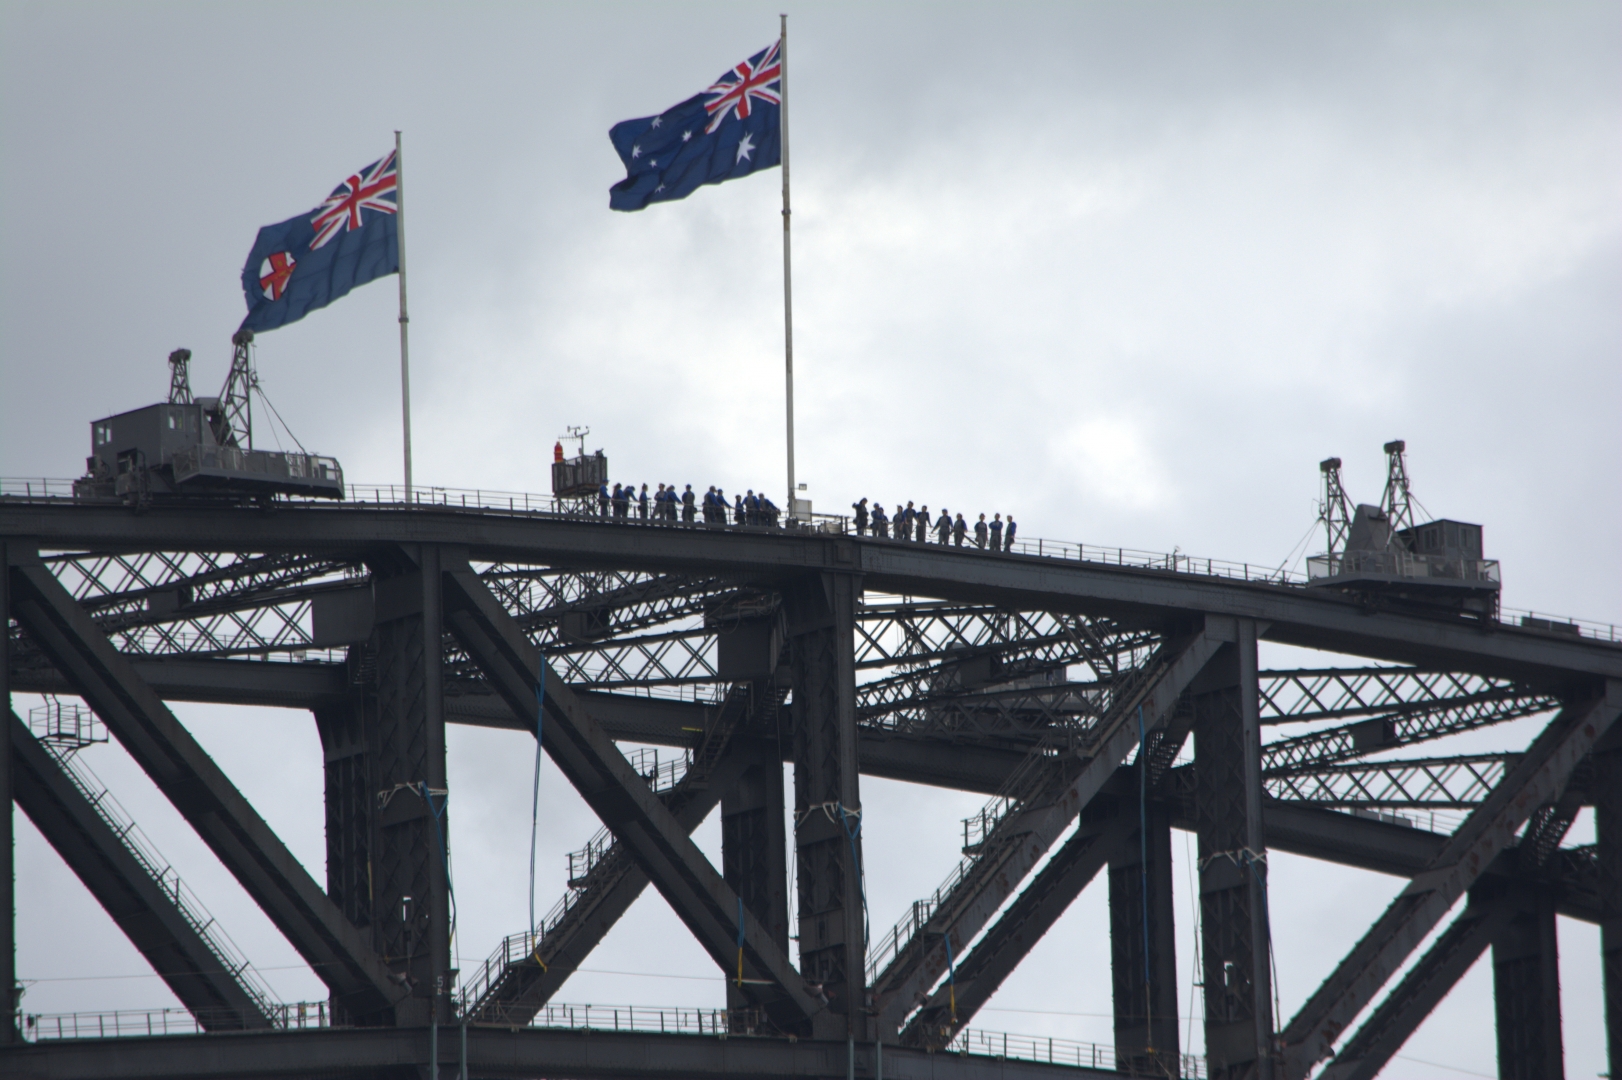 Climbers on Sydney Harbour Bridge